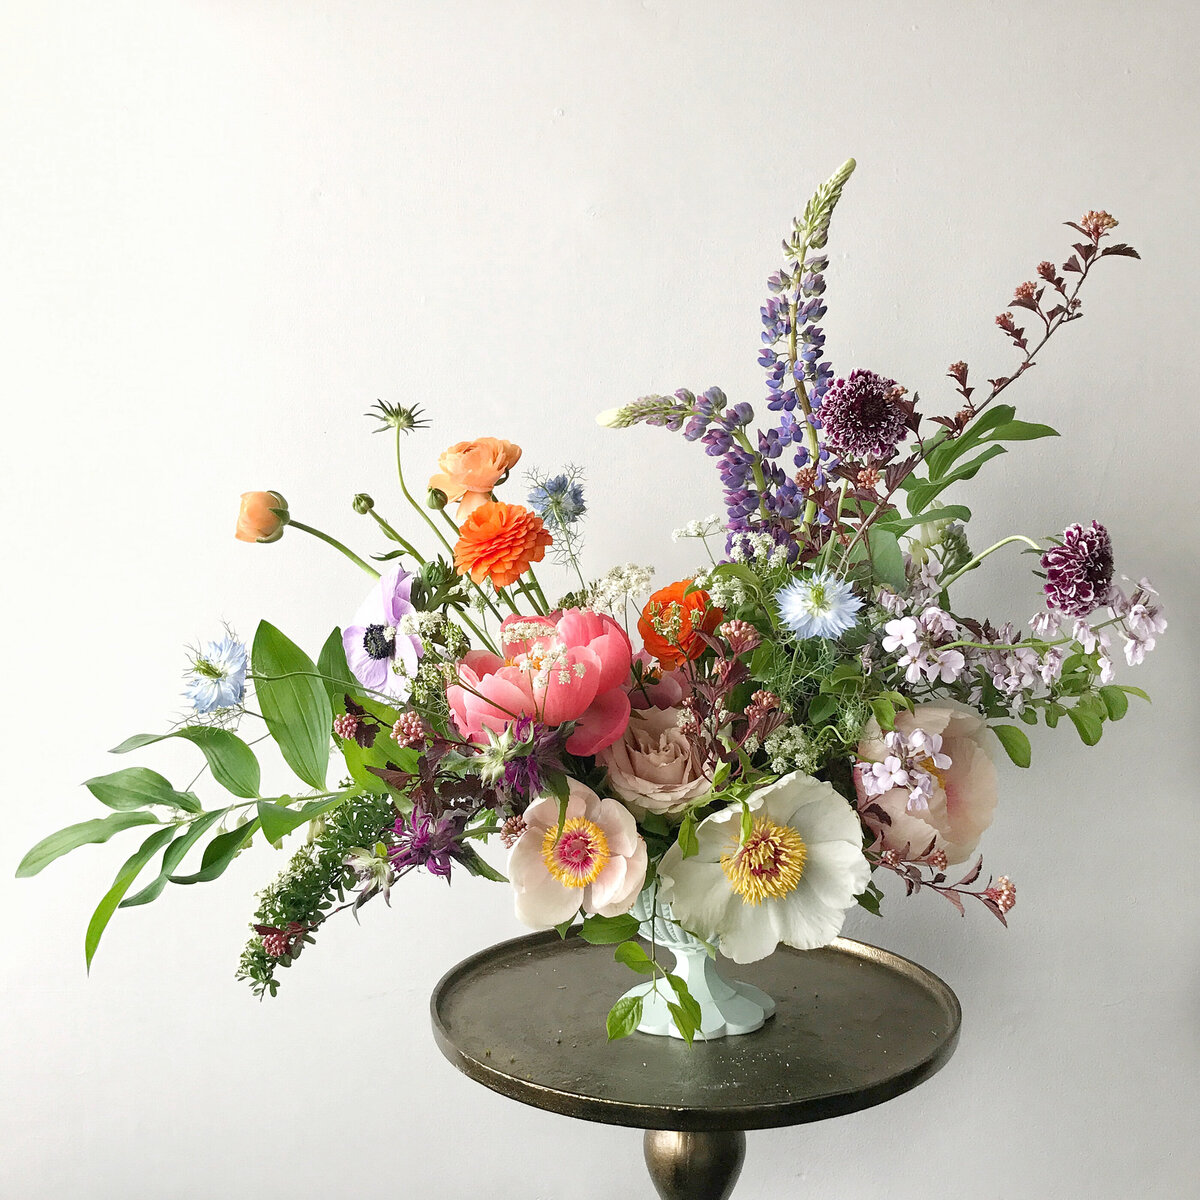 Atelier-Carmel-Wedding-Florist-GALLERY-Arrangements-13